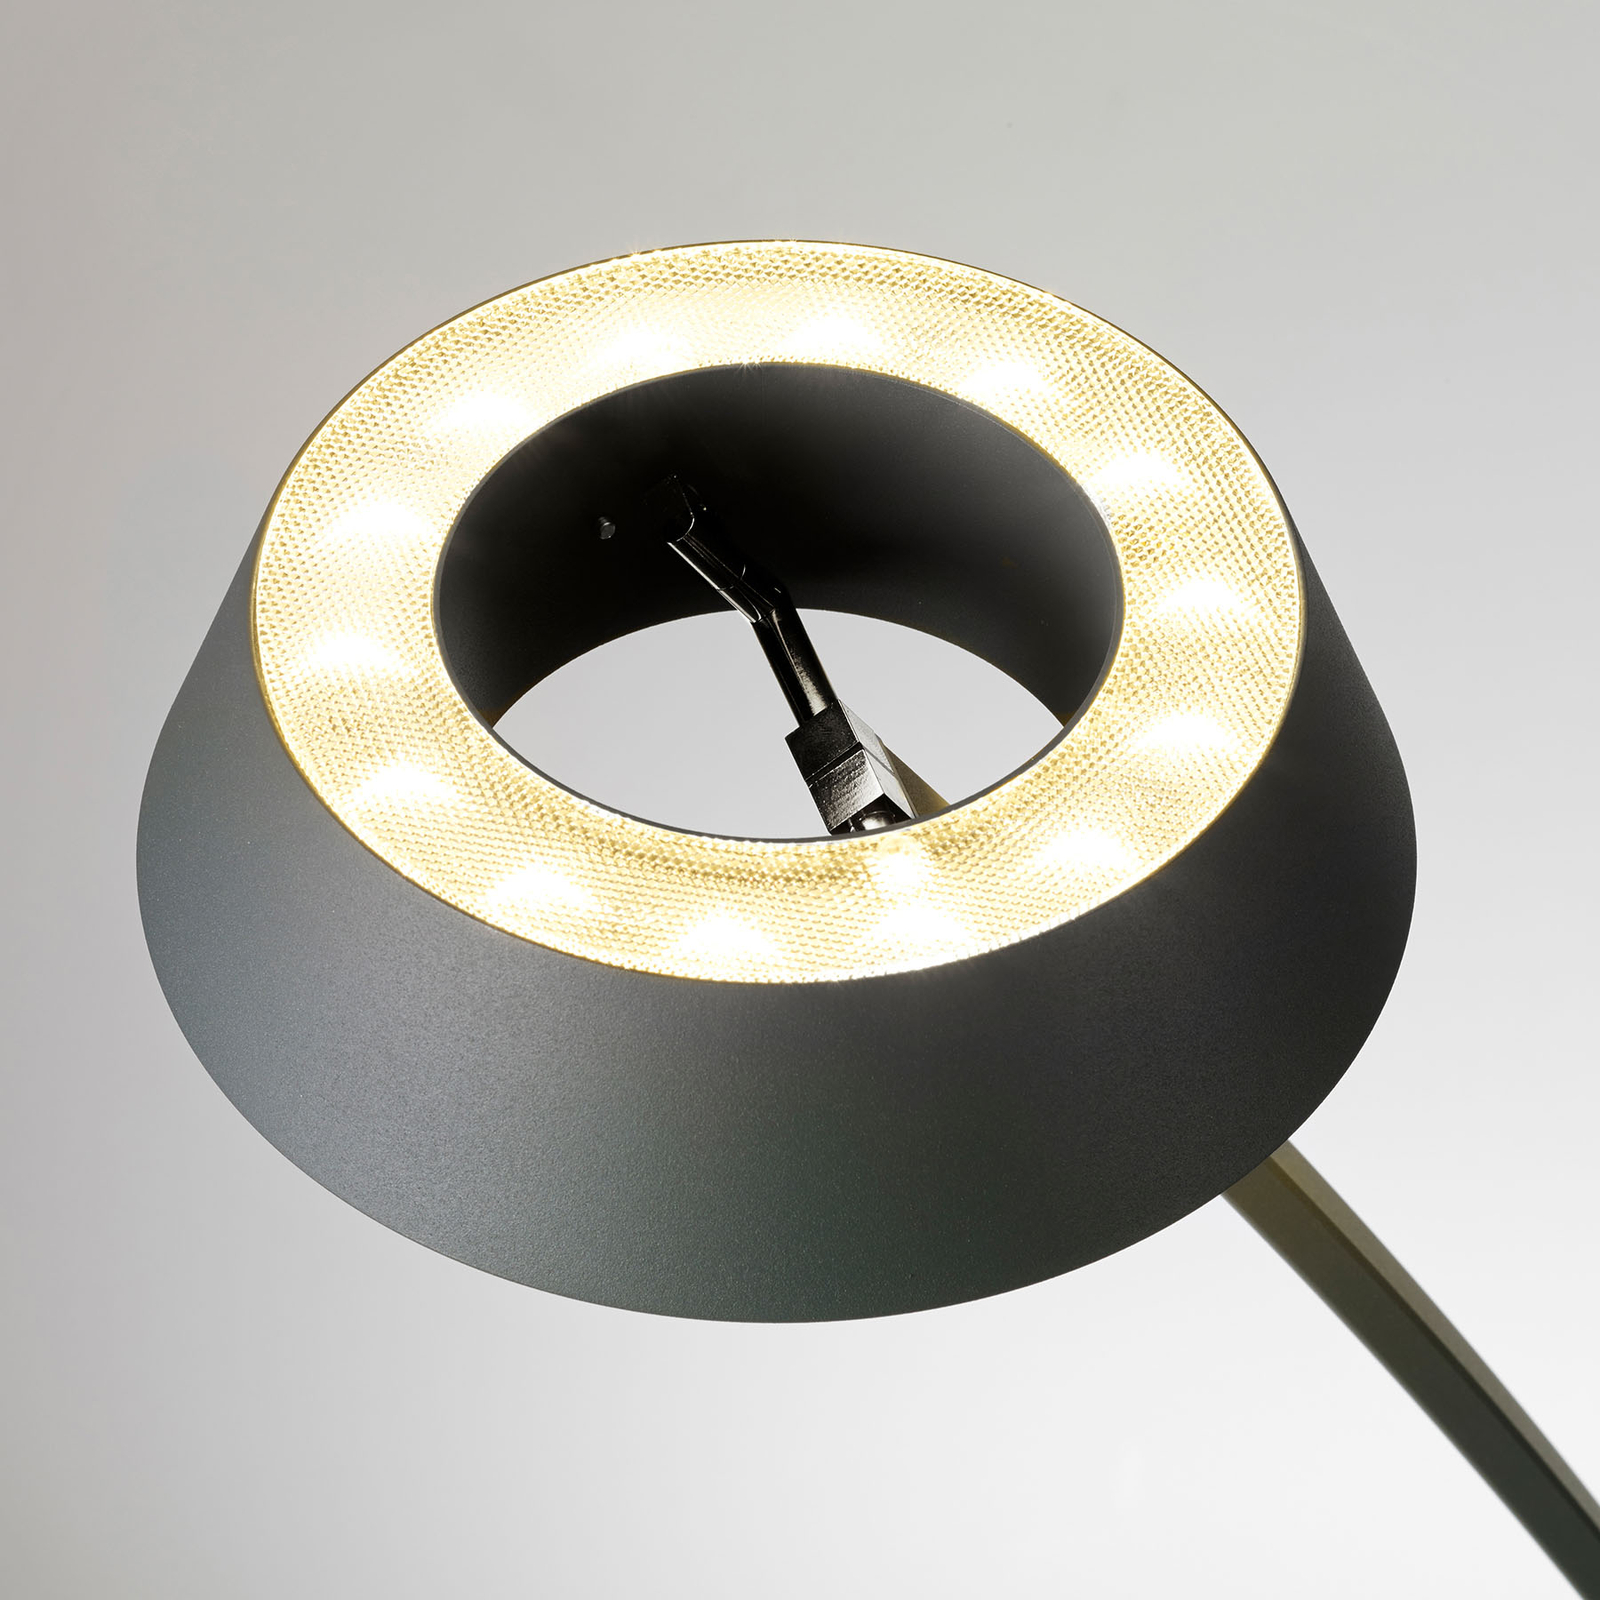 OLIGO Glance lampe à poser LED arquée grise mate